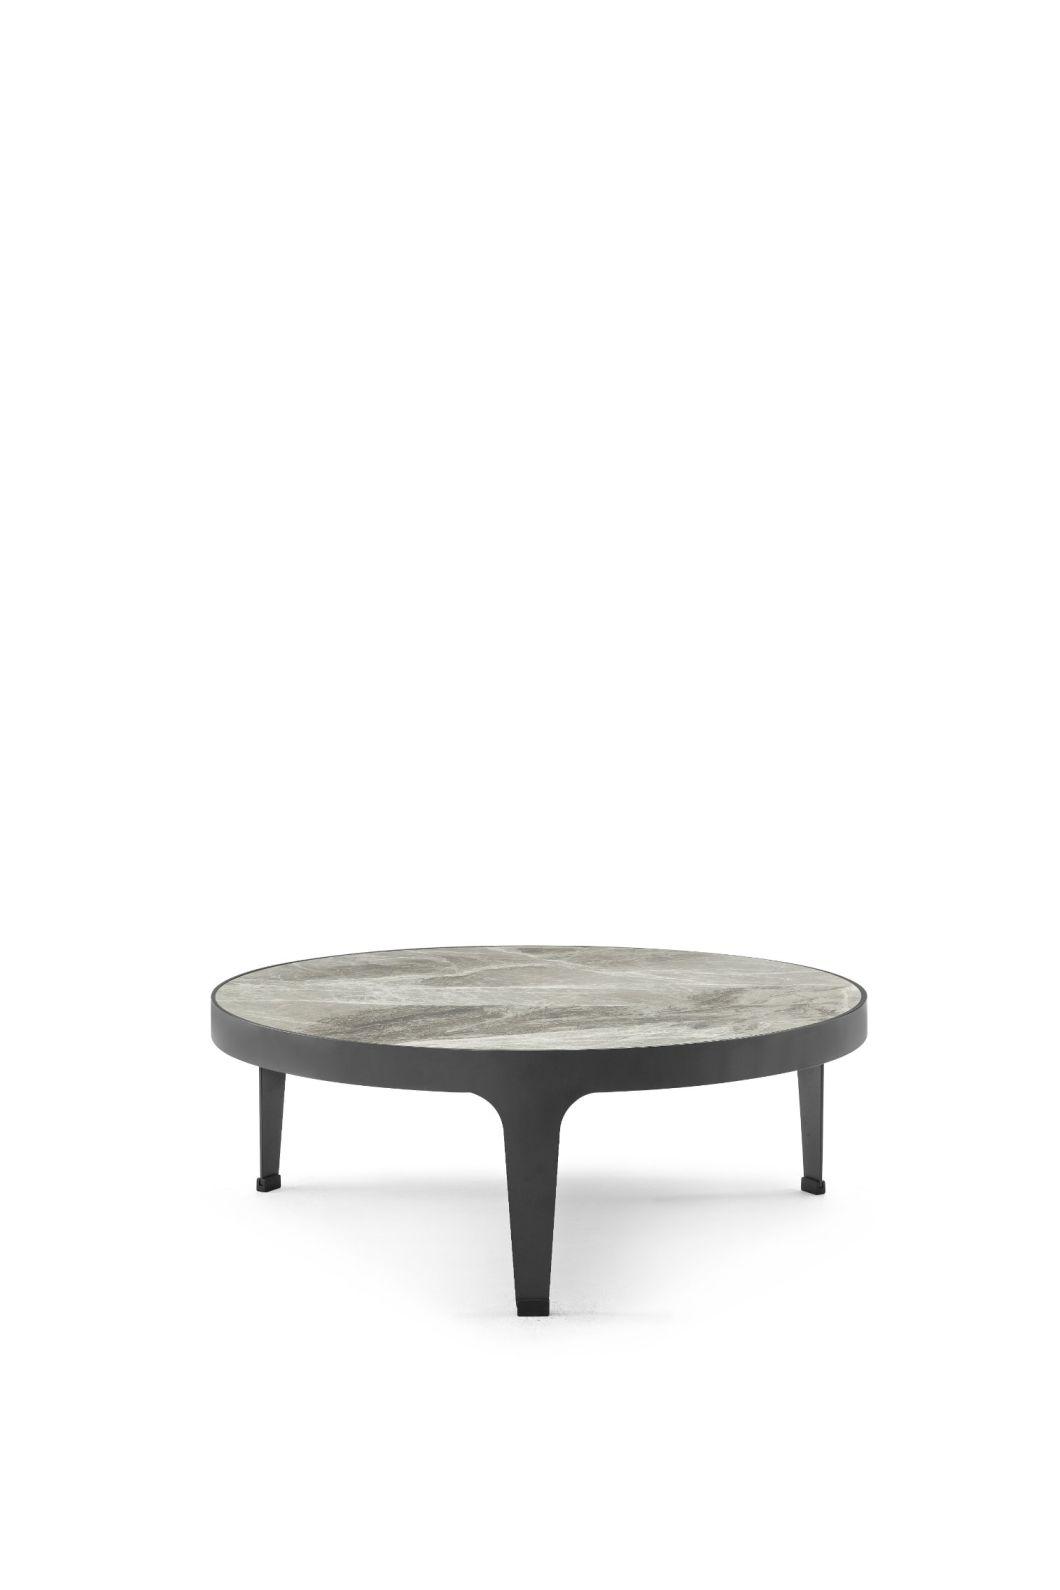 M-Cj003c Coffee Table, Italian Design Furniture in Home and Hotel